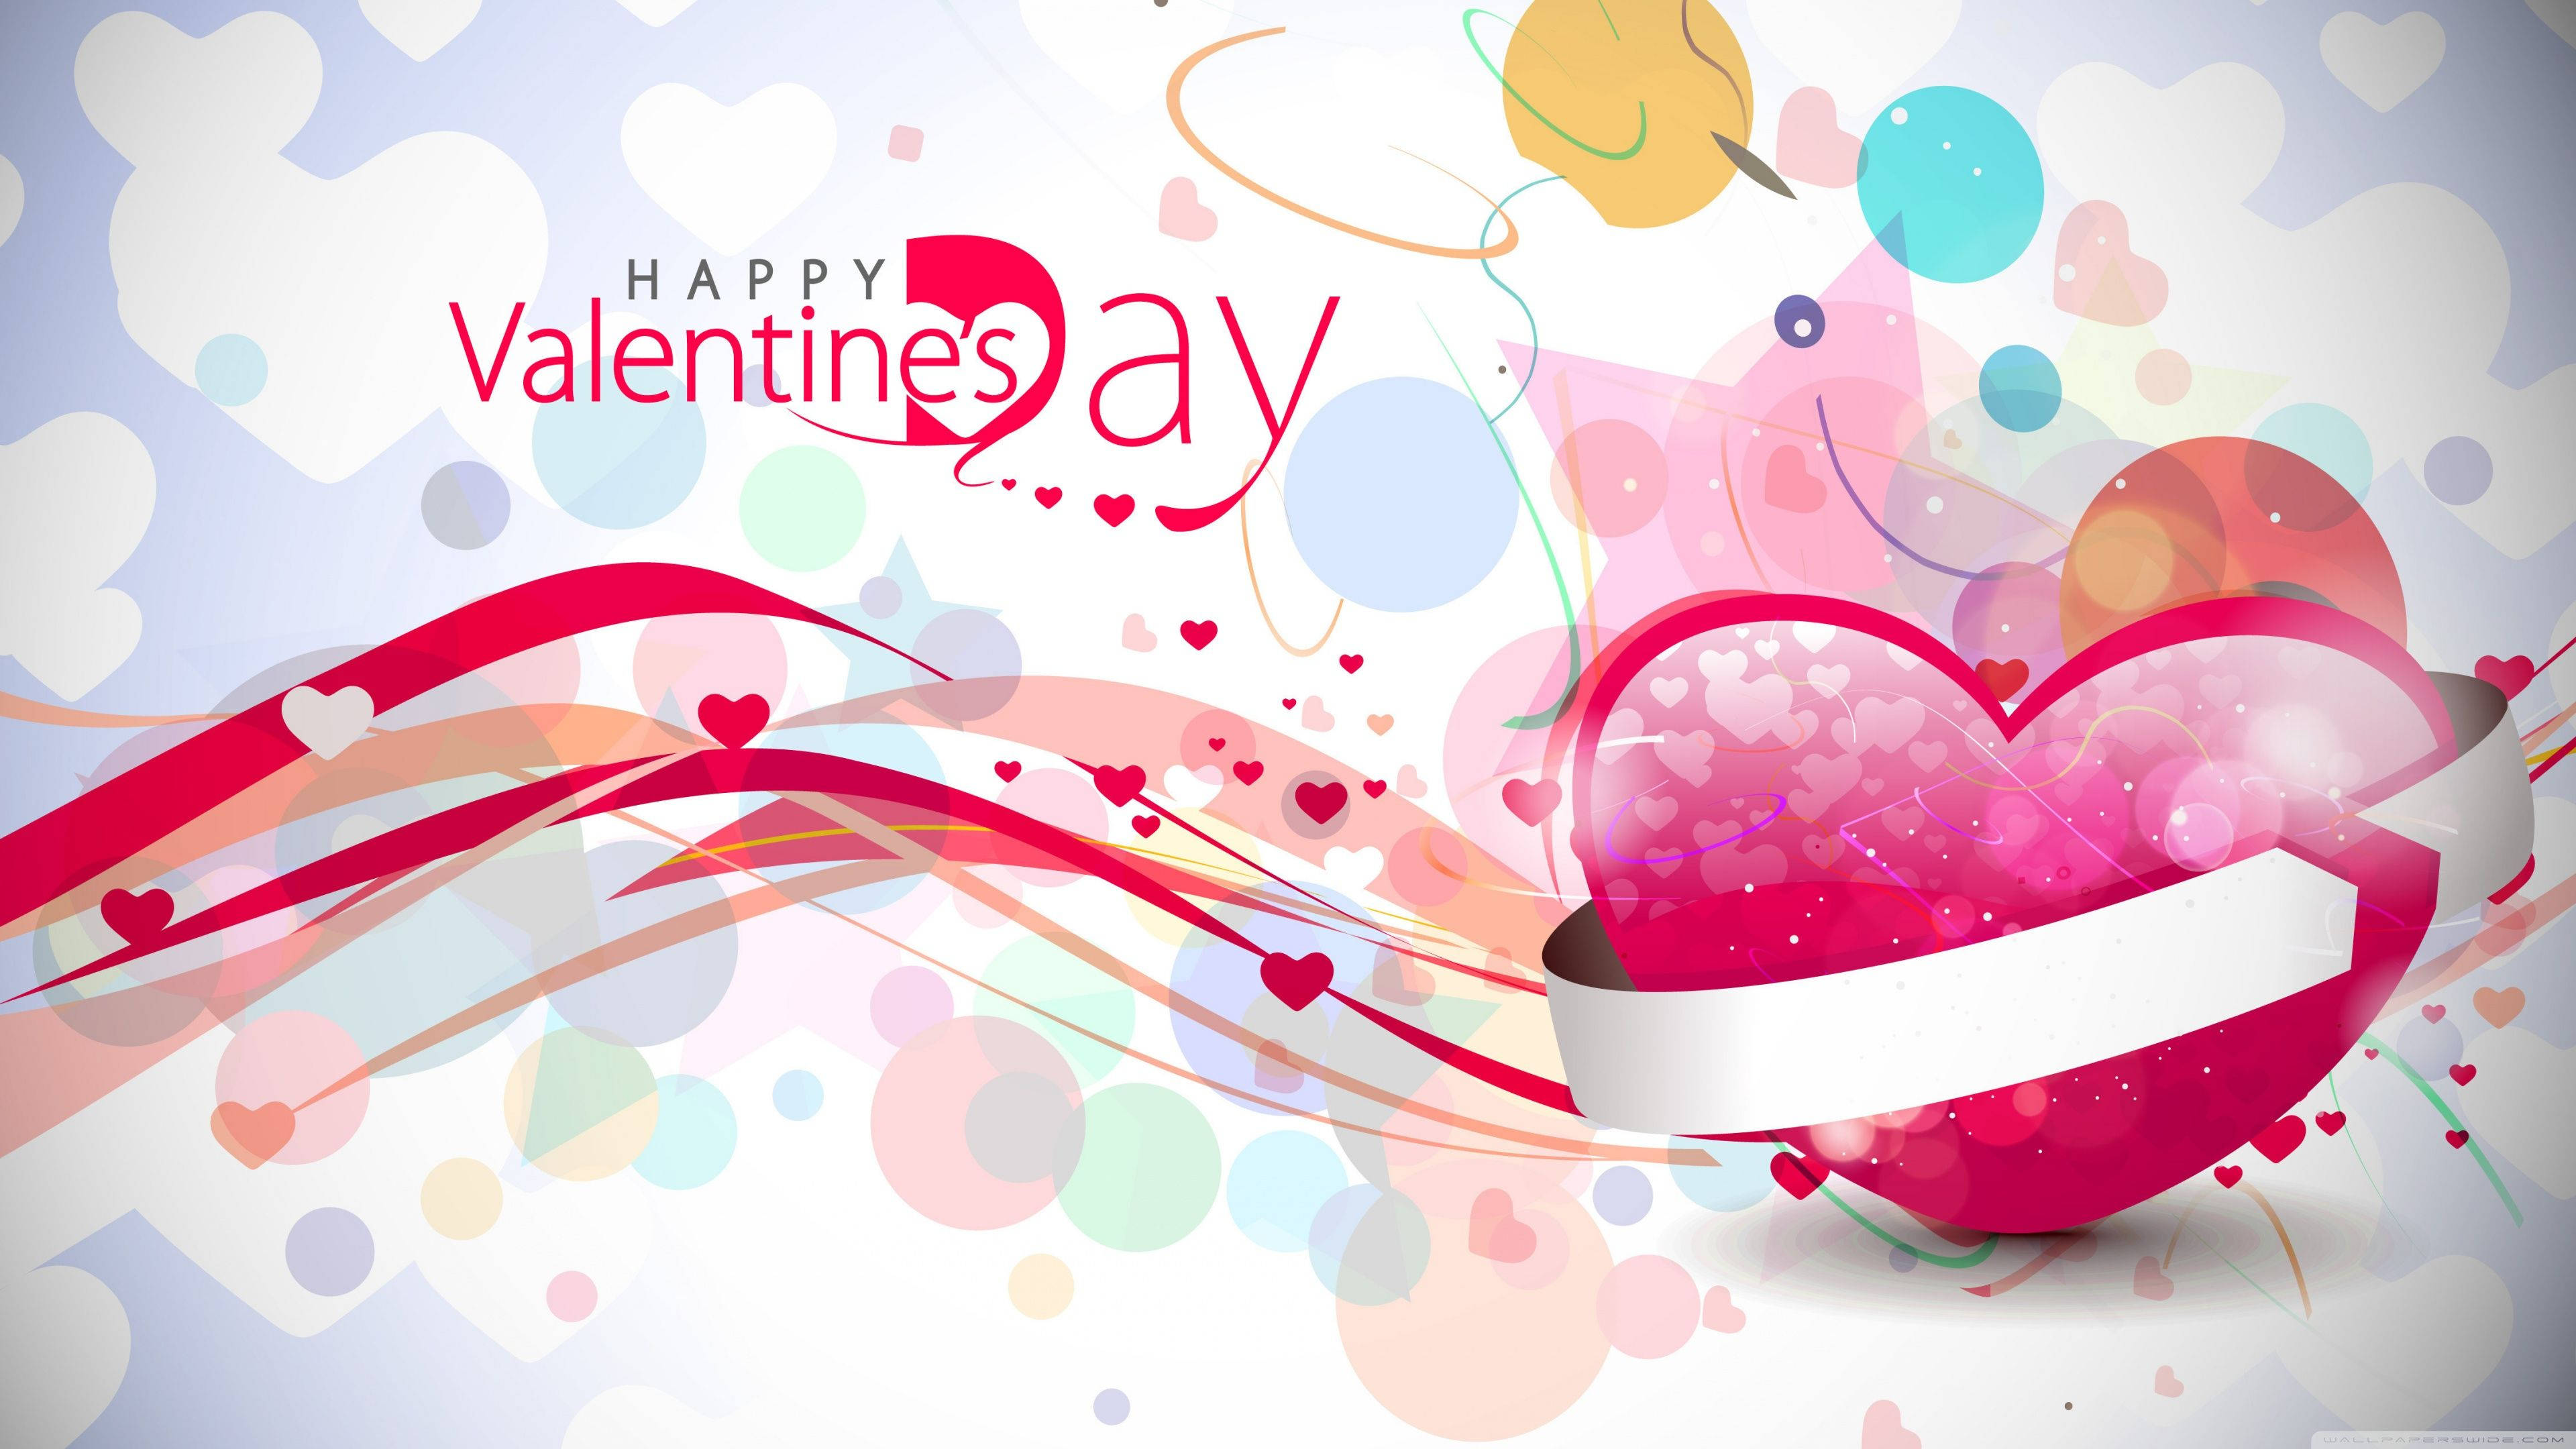 Download Artistic Valentine's Greeting Desktop Wallpaper